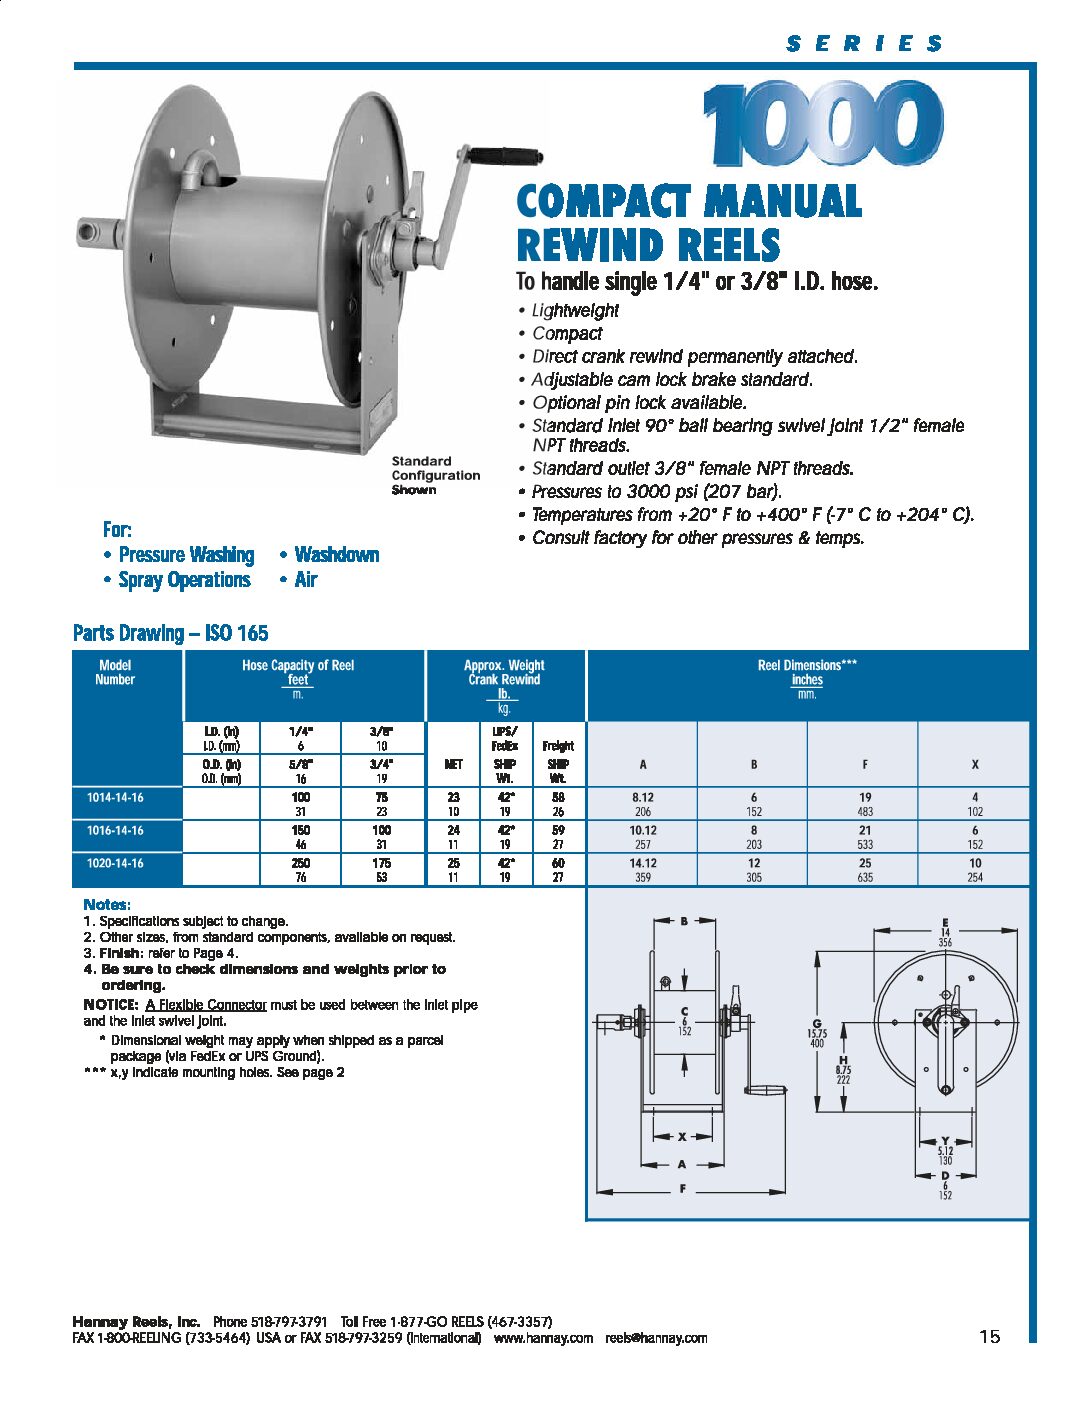 Hannay 1000 Series manual Hose Reels technical information